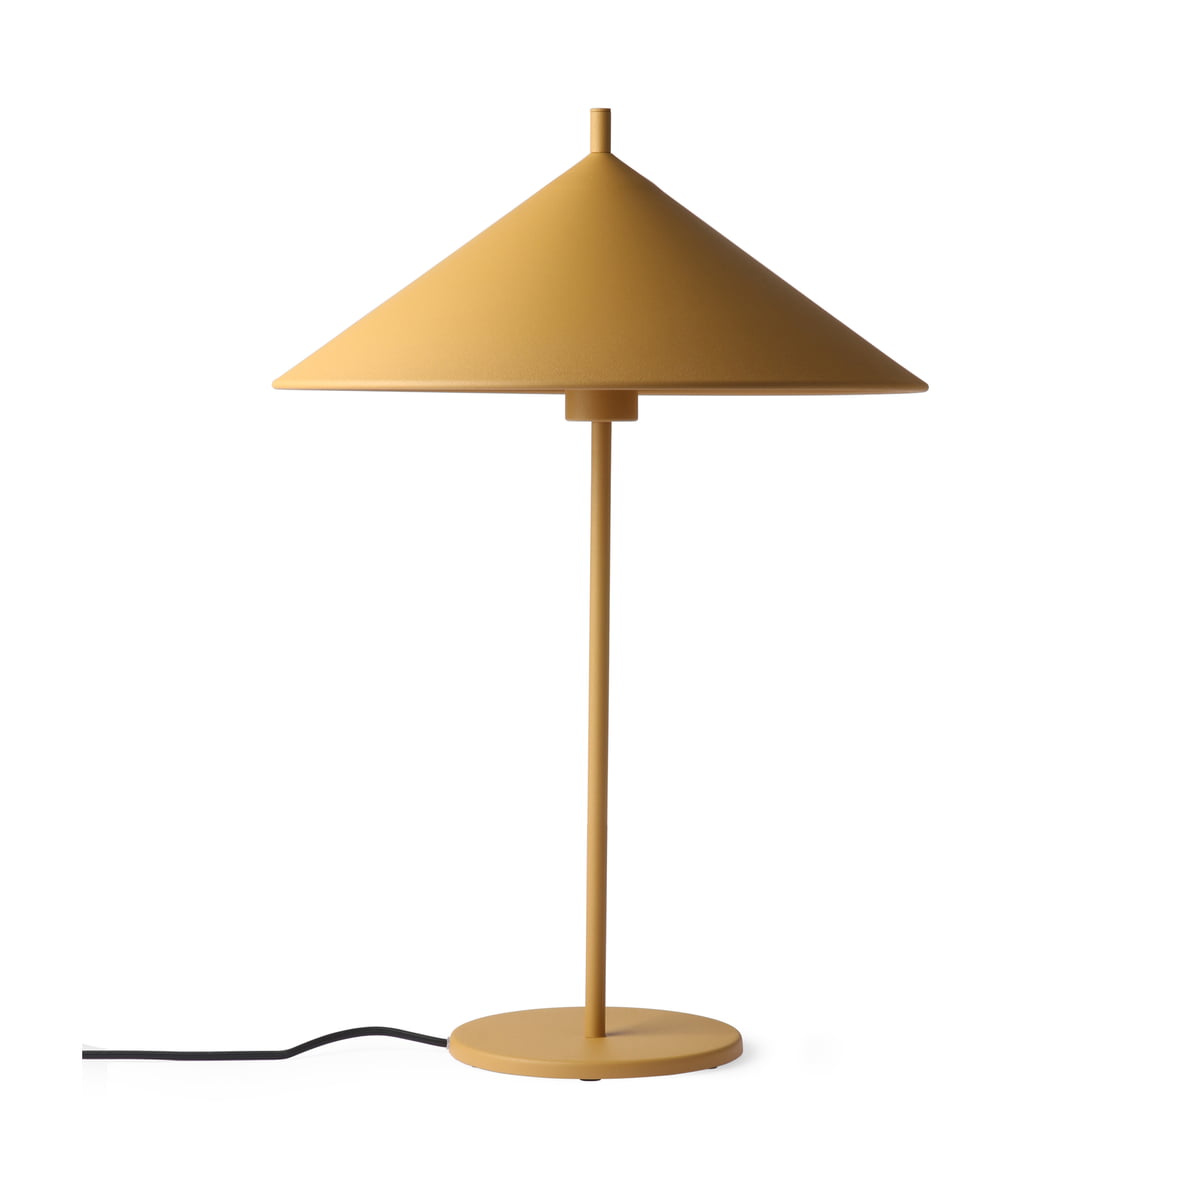 Tegenwerken Oeps Normalisatie Hkliving - Triangle table lamp | Connox